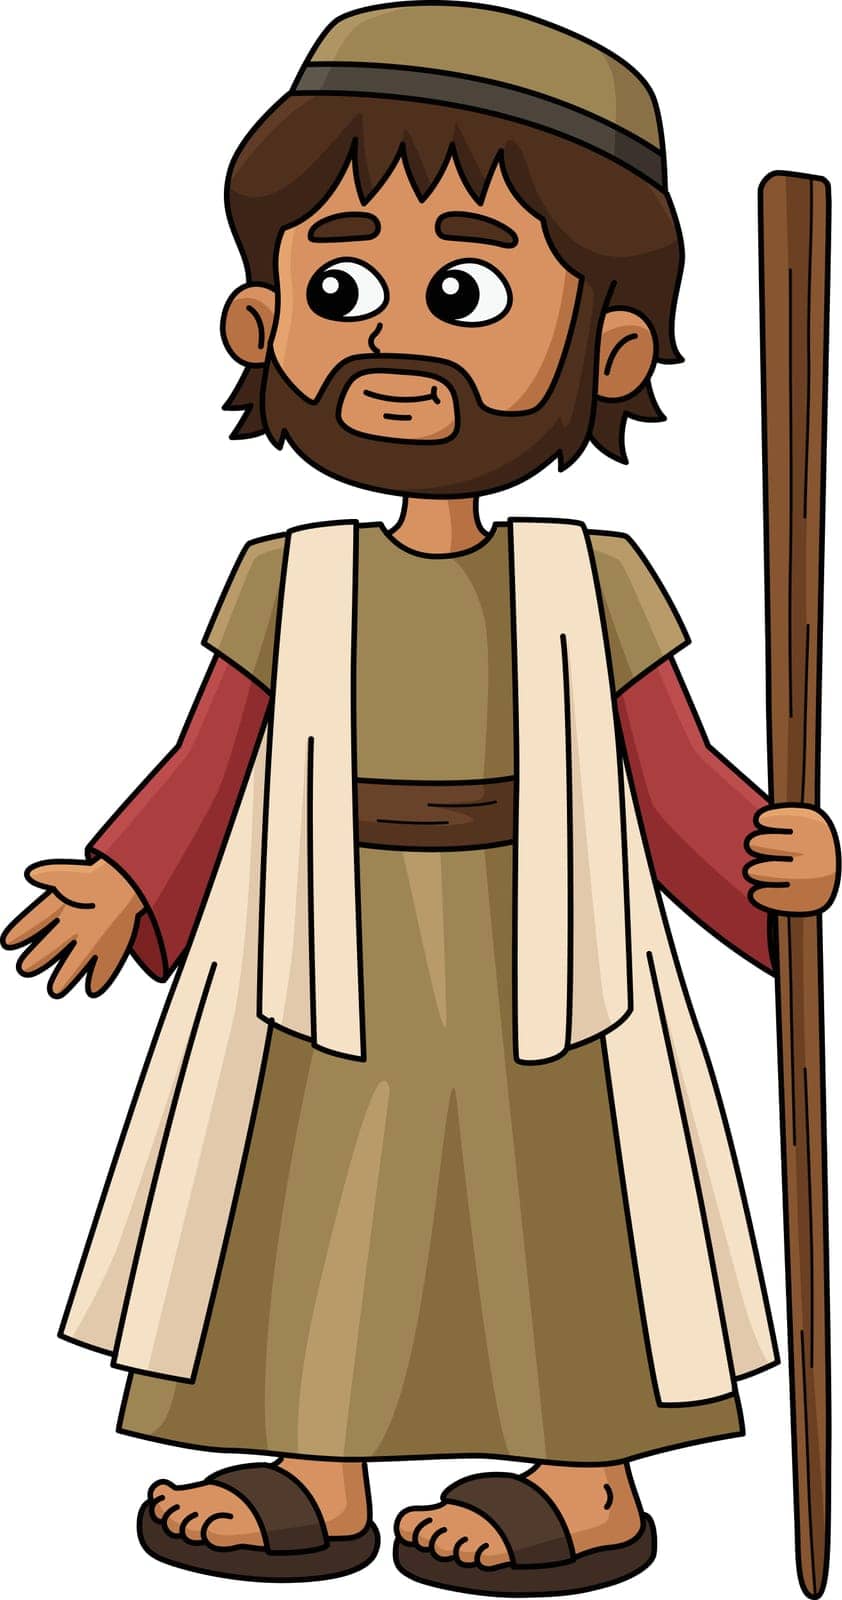 This cartoon clipart shows a Joseph illustration.